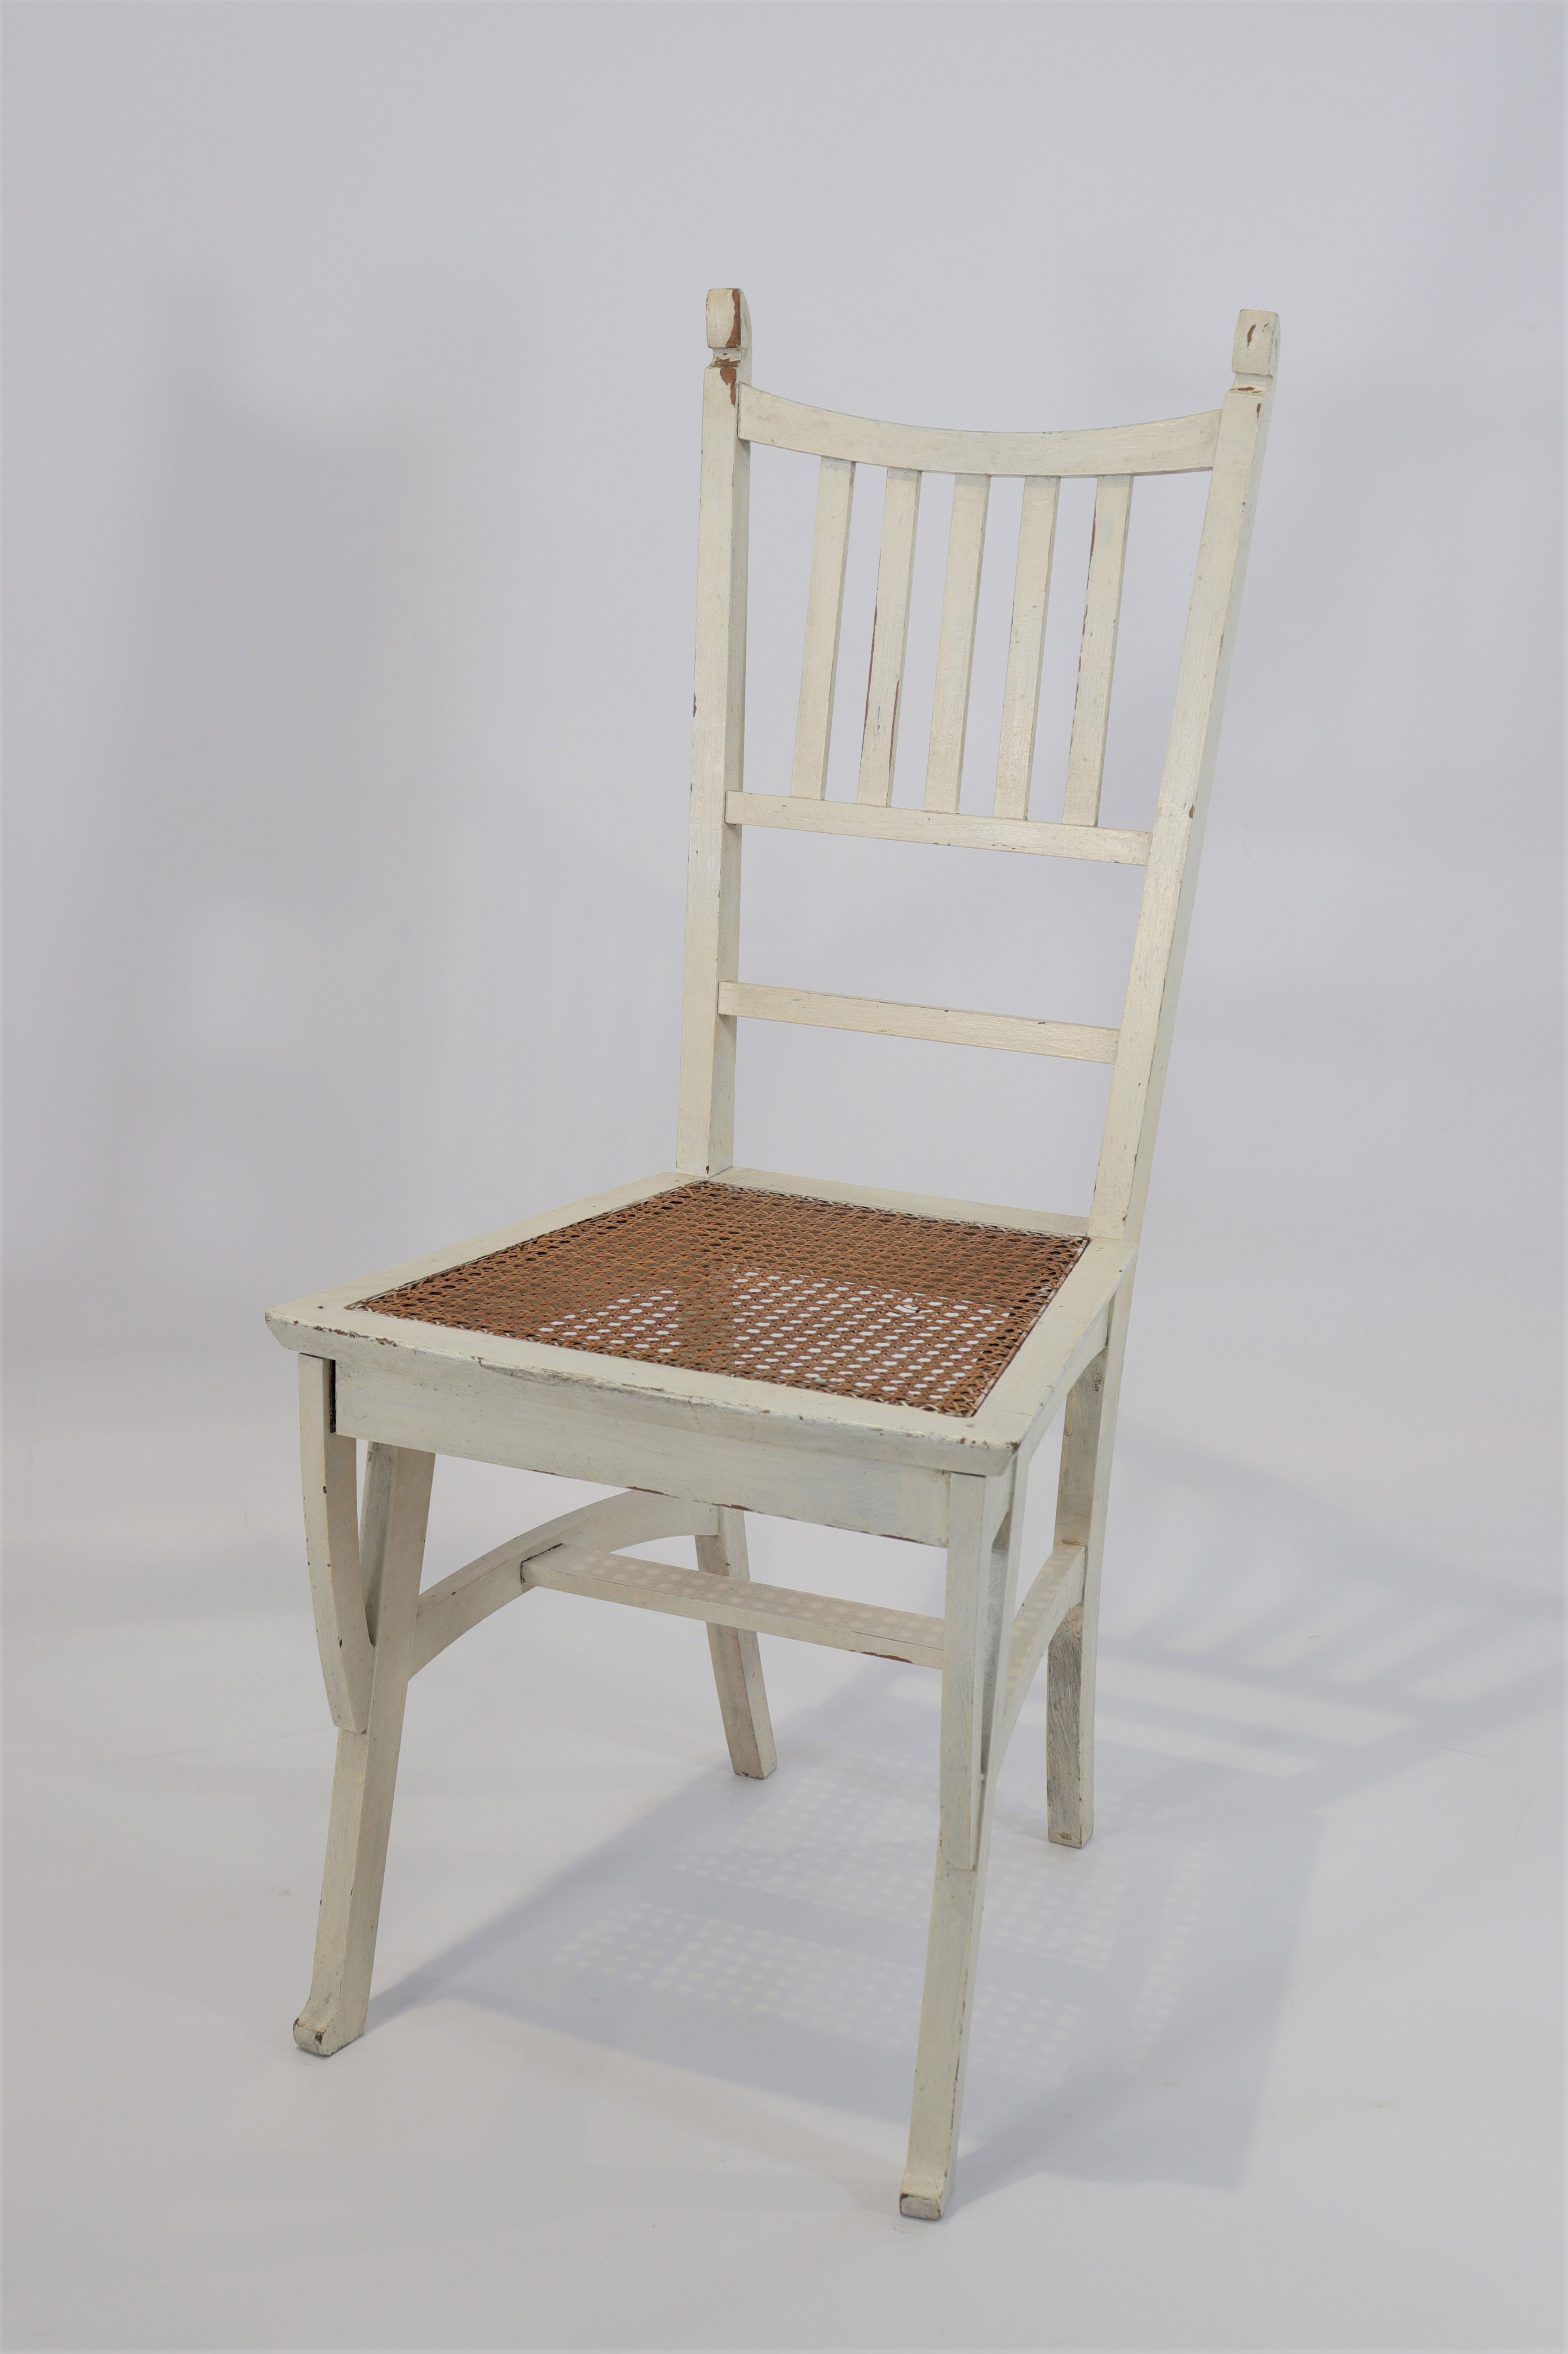 Belgium - Gustav Serurrier chair - 1900 - Image 2 of 2